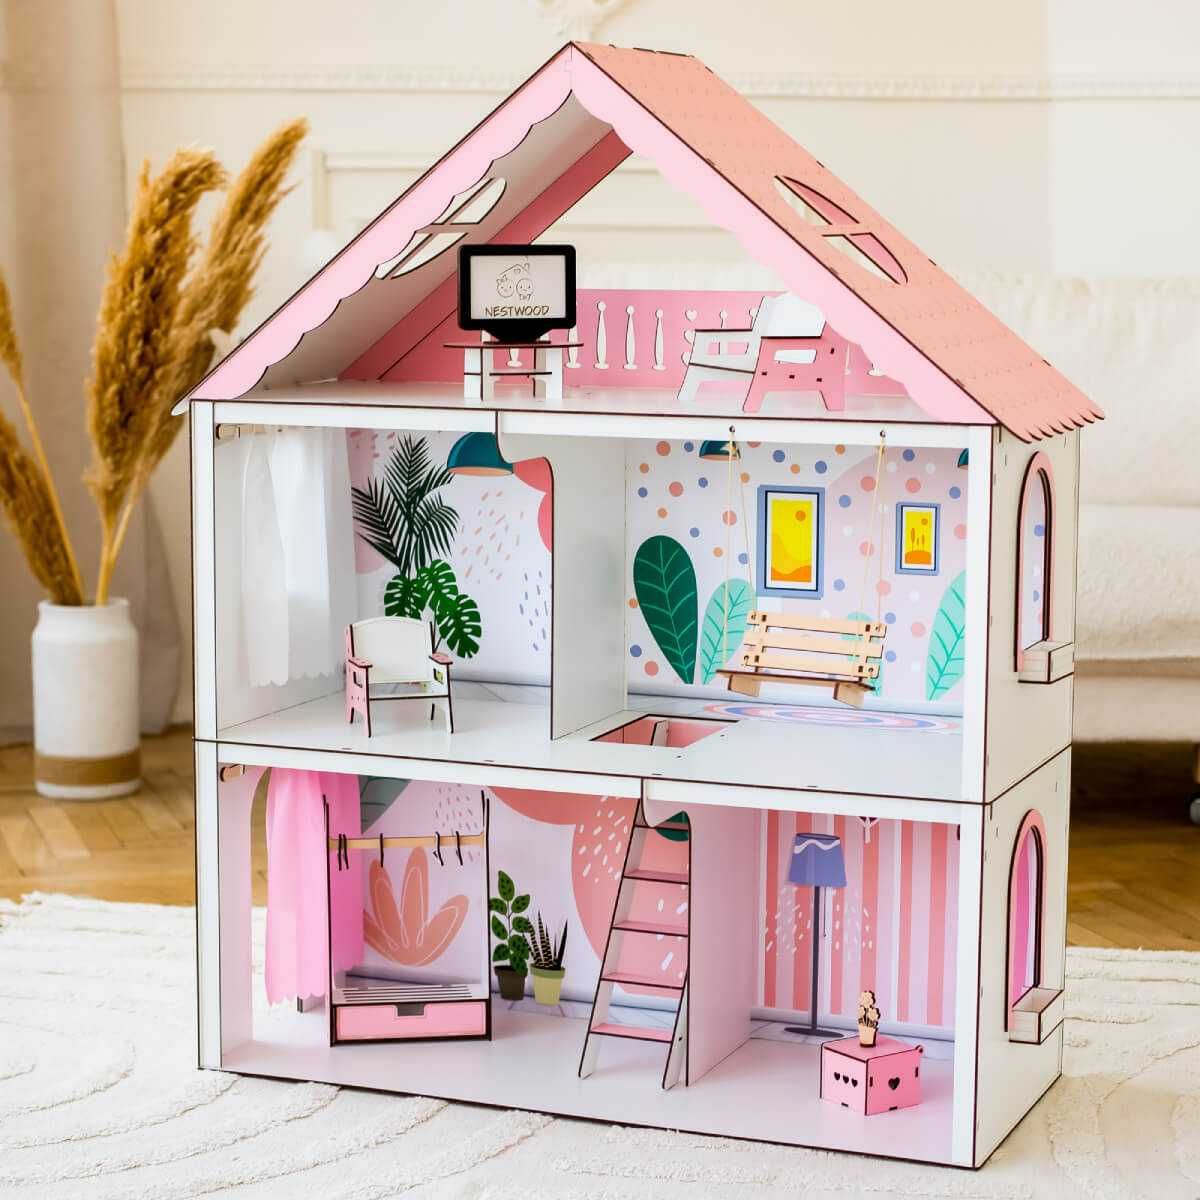 Ляльковий будинок + подарунок меблі Кукольный домик куклы Барби Лол